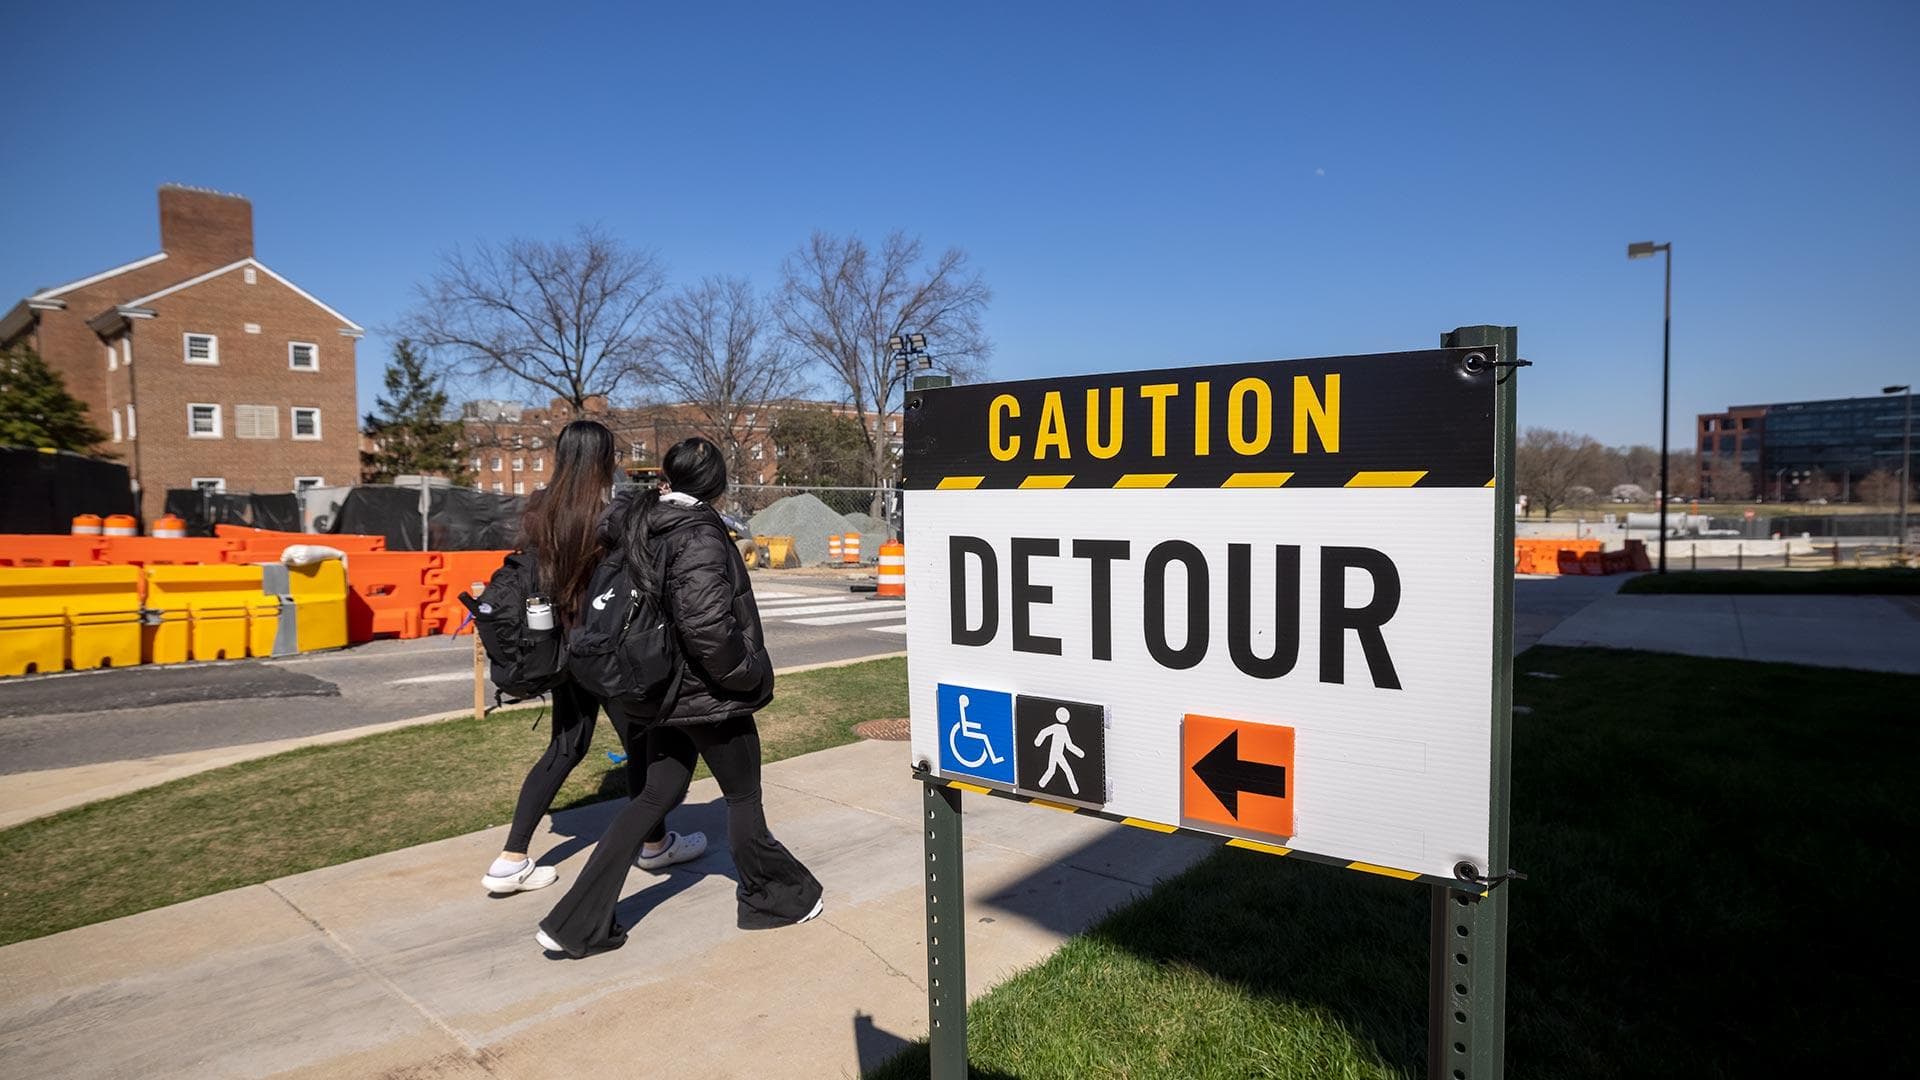 two students walk past "CAUTION: DETOUR" sign on campus